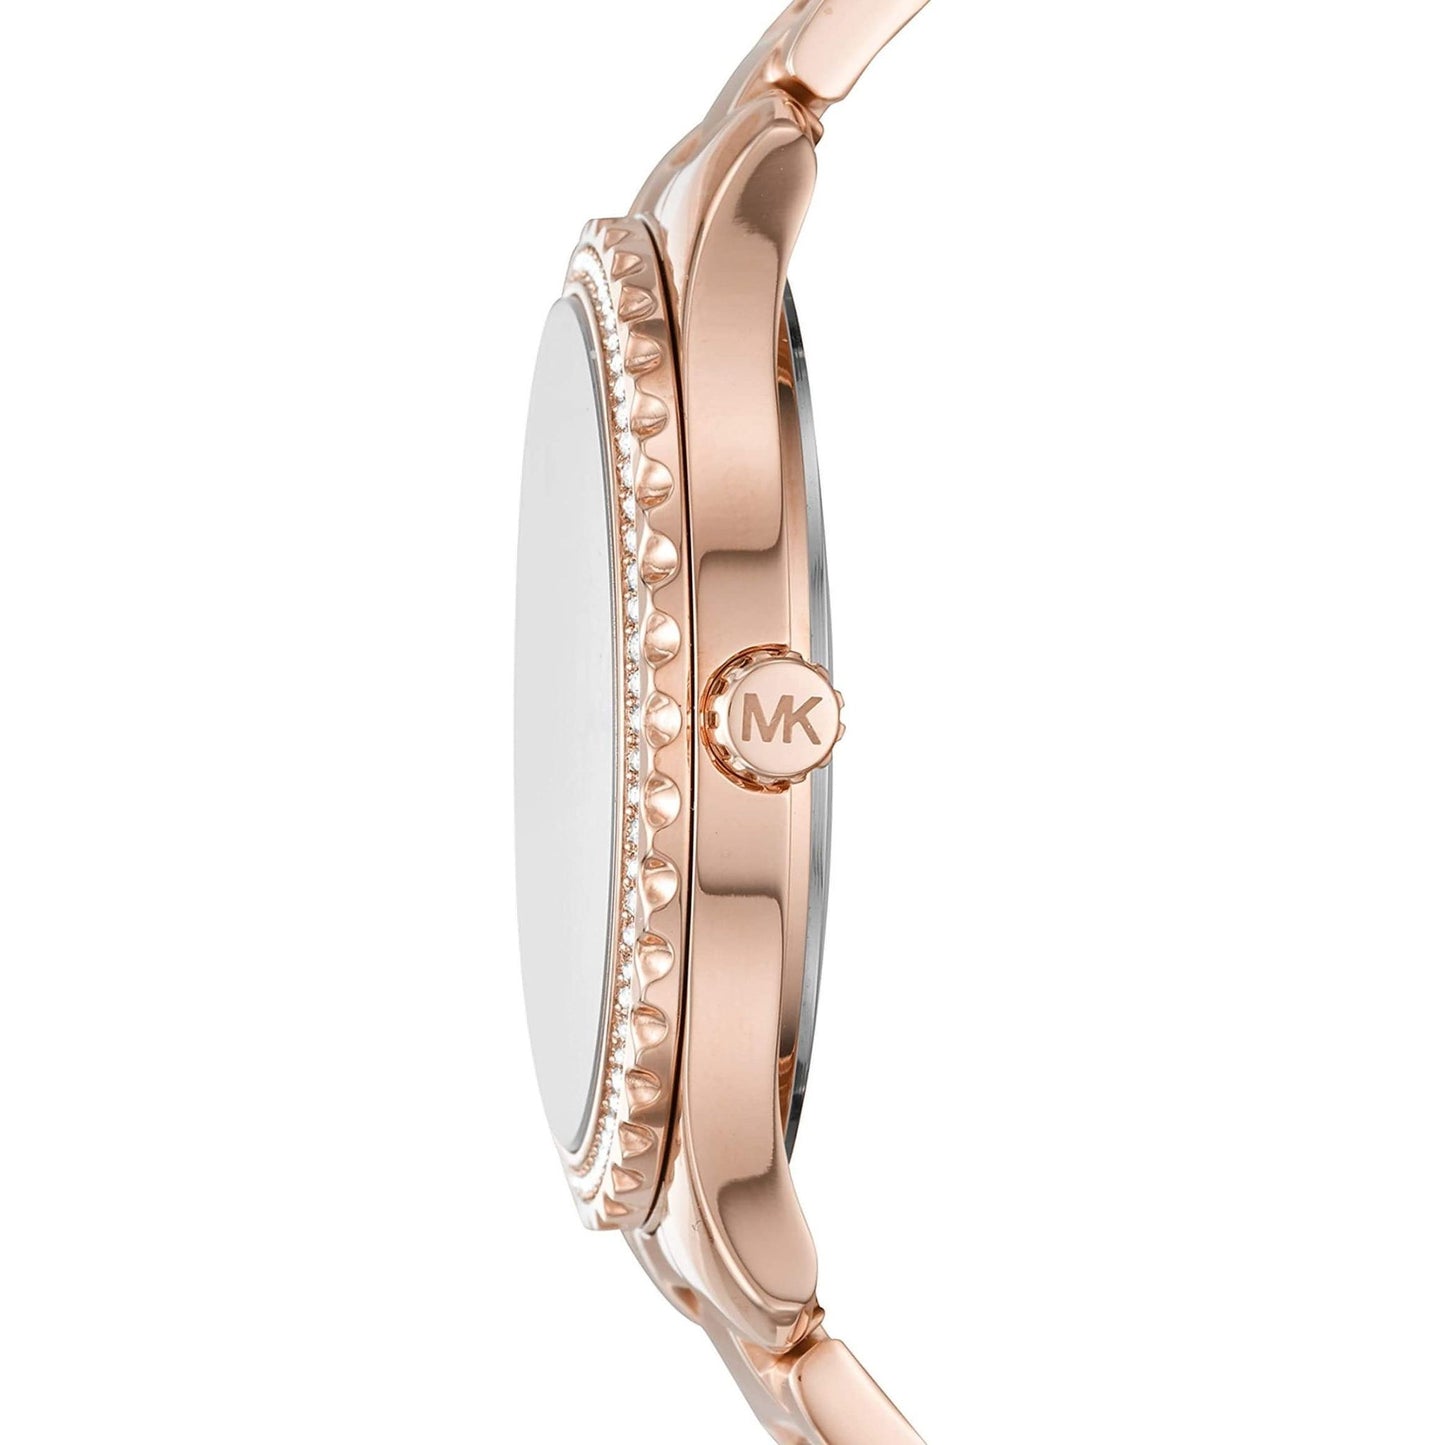 Michael Kors Women's Watch - Layton Three-Hand Rose Gold 38mm (MK6848) - Brandat Outlet